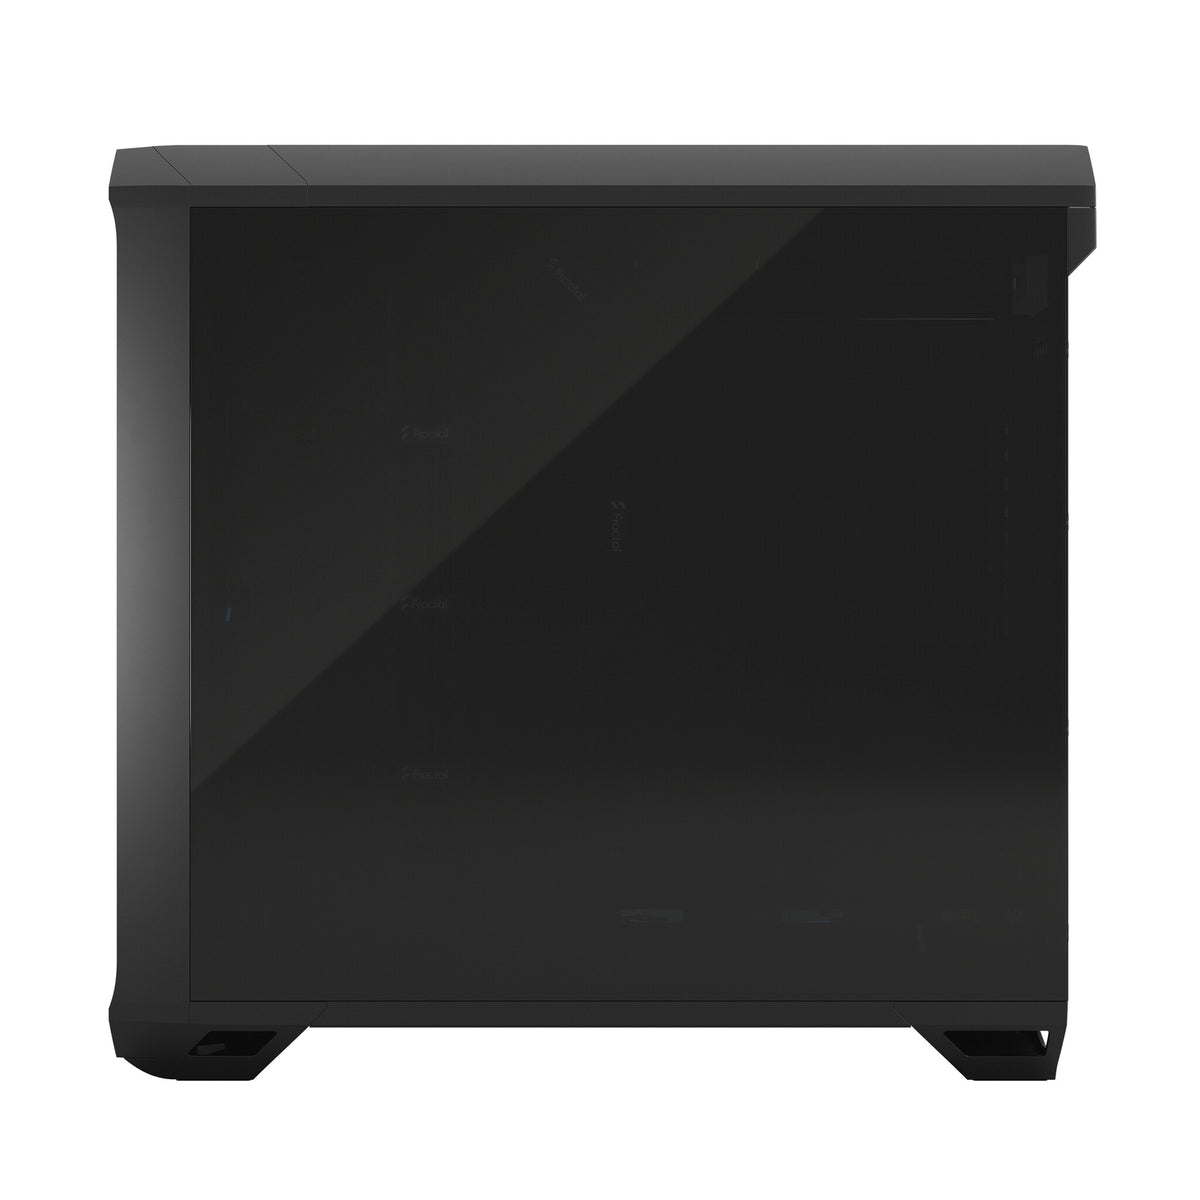 Fractal Design Torrent RGB - ATX Mid Tower Case in Black